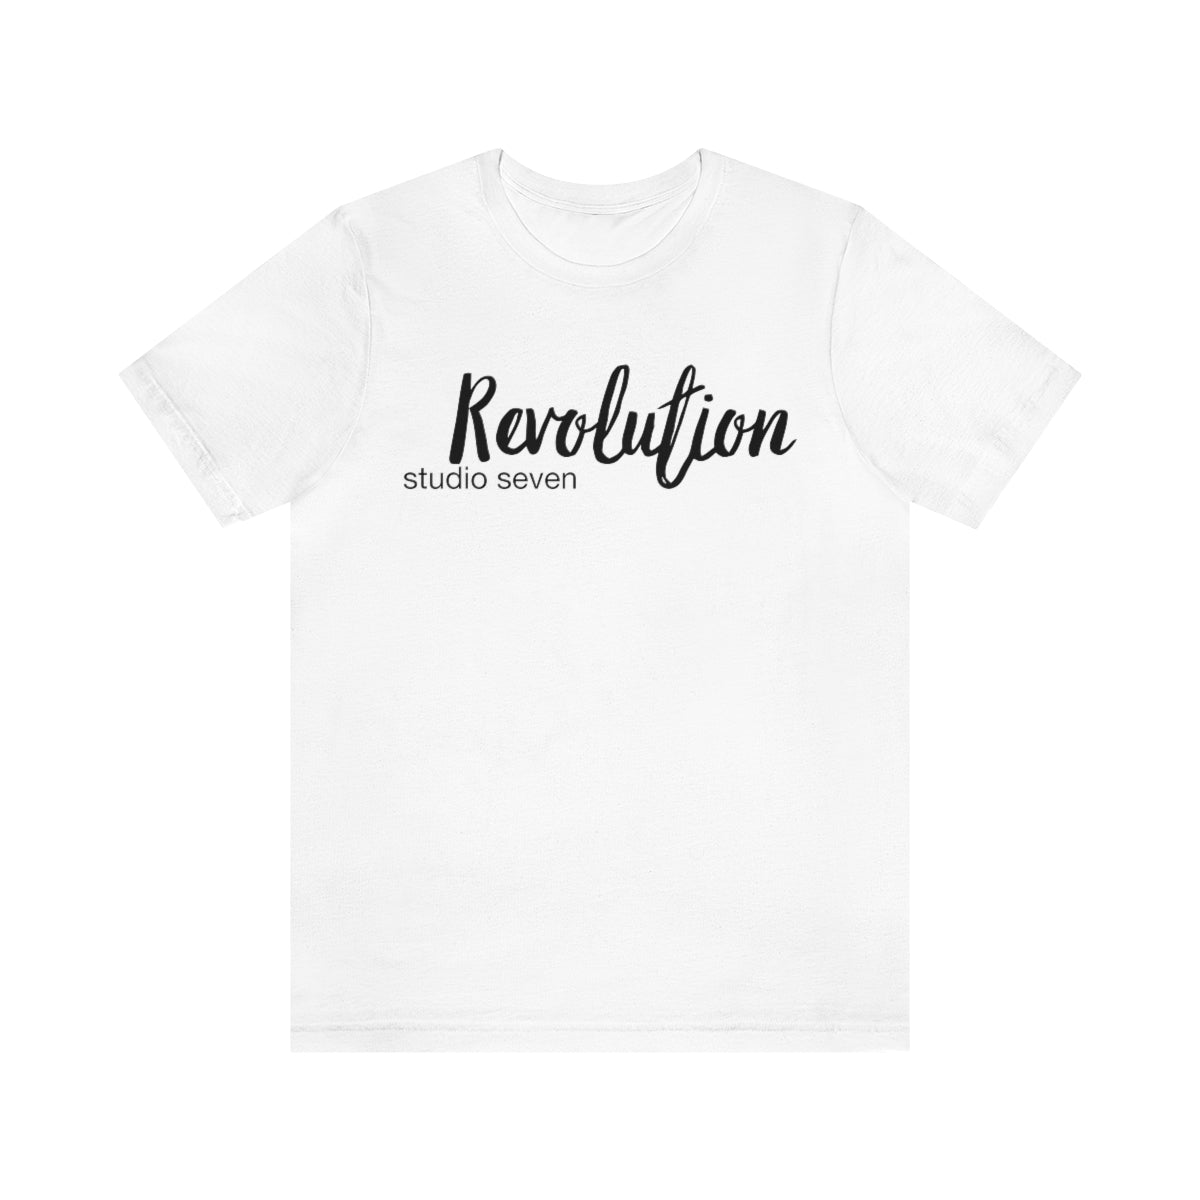 Revolution Tee